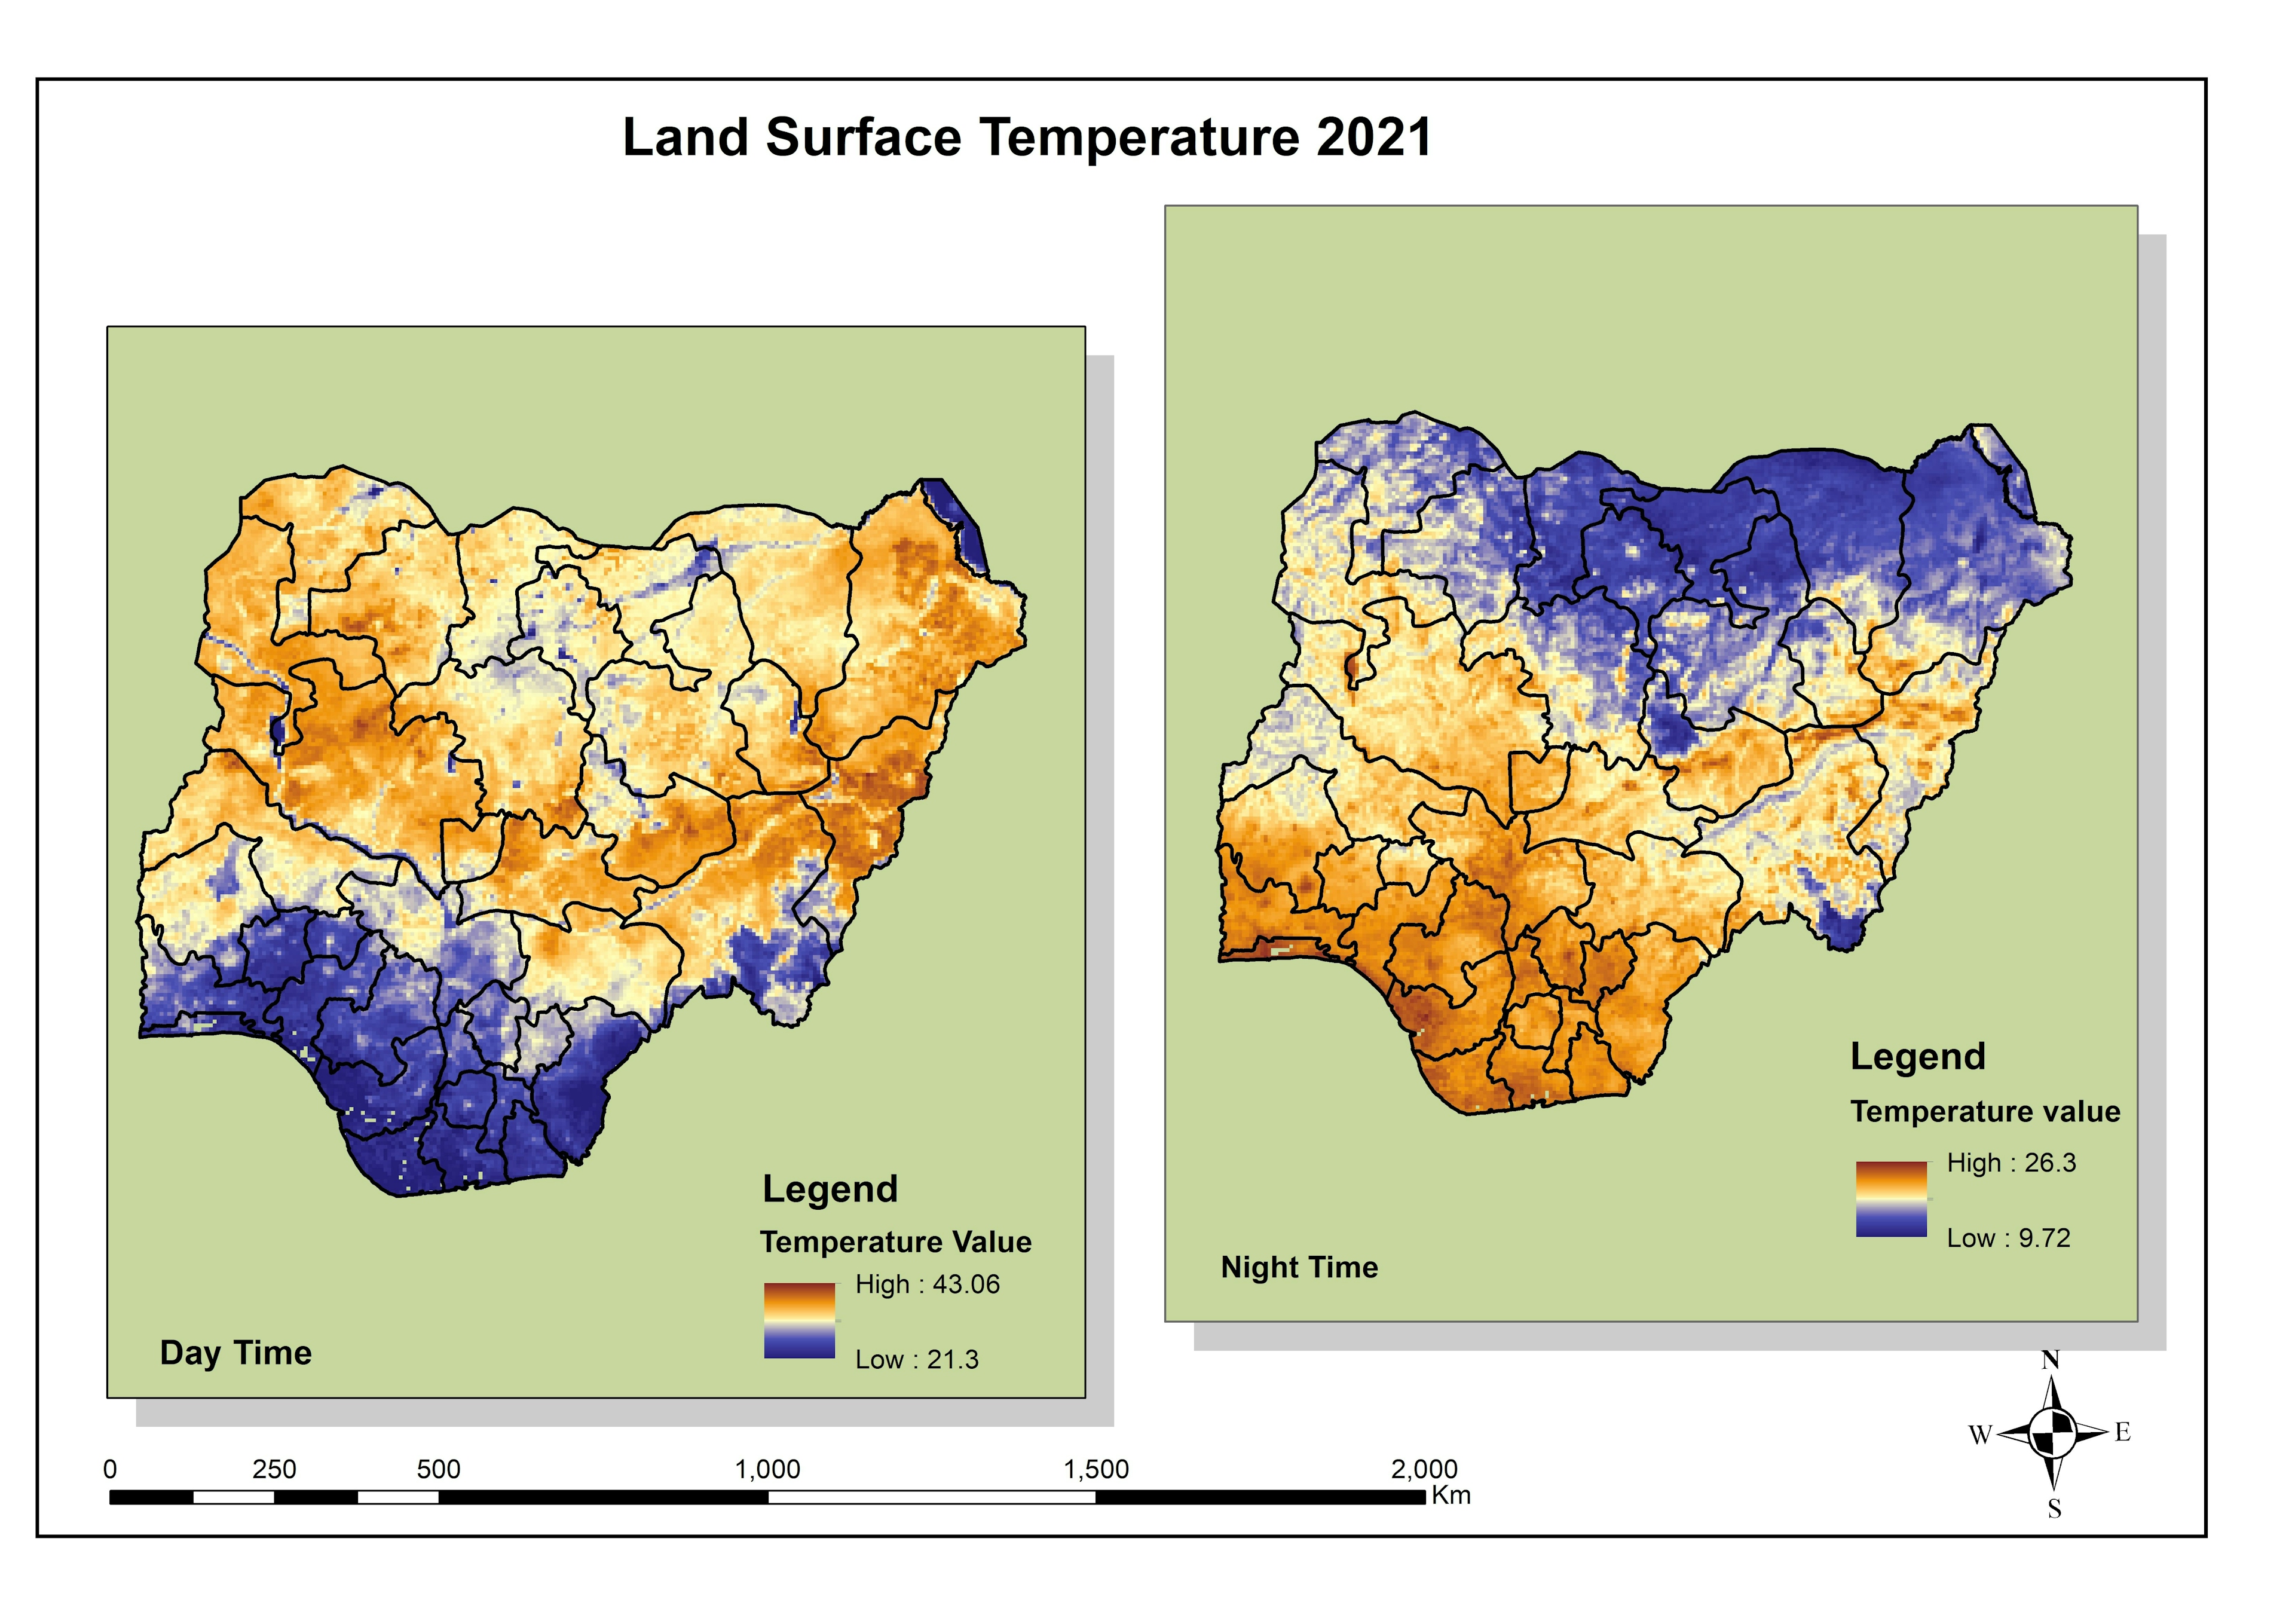 Land Surface Temperature variation